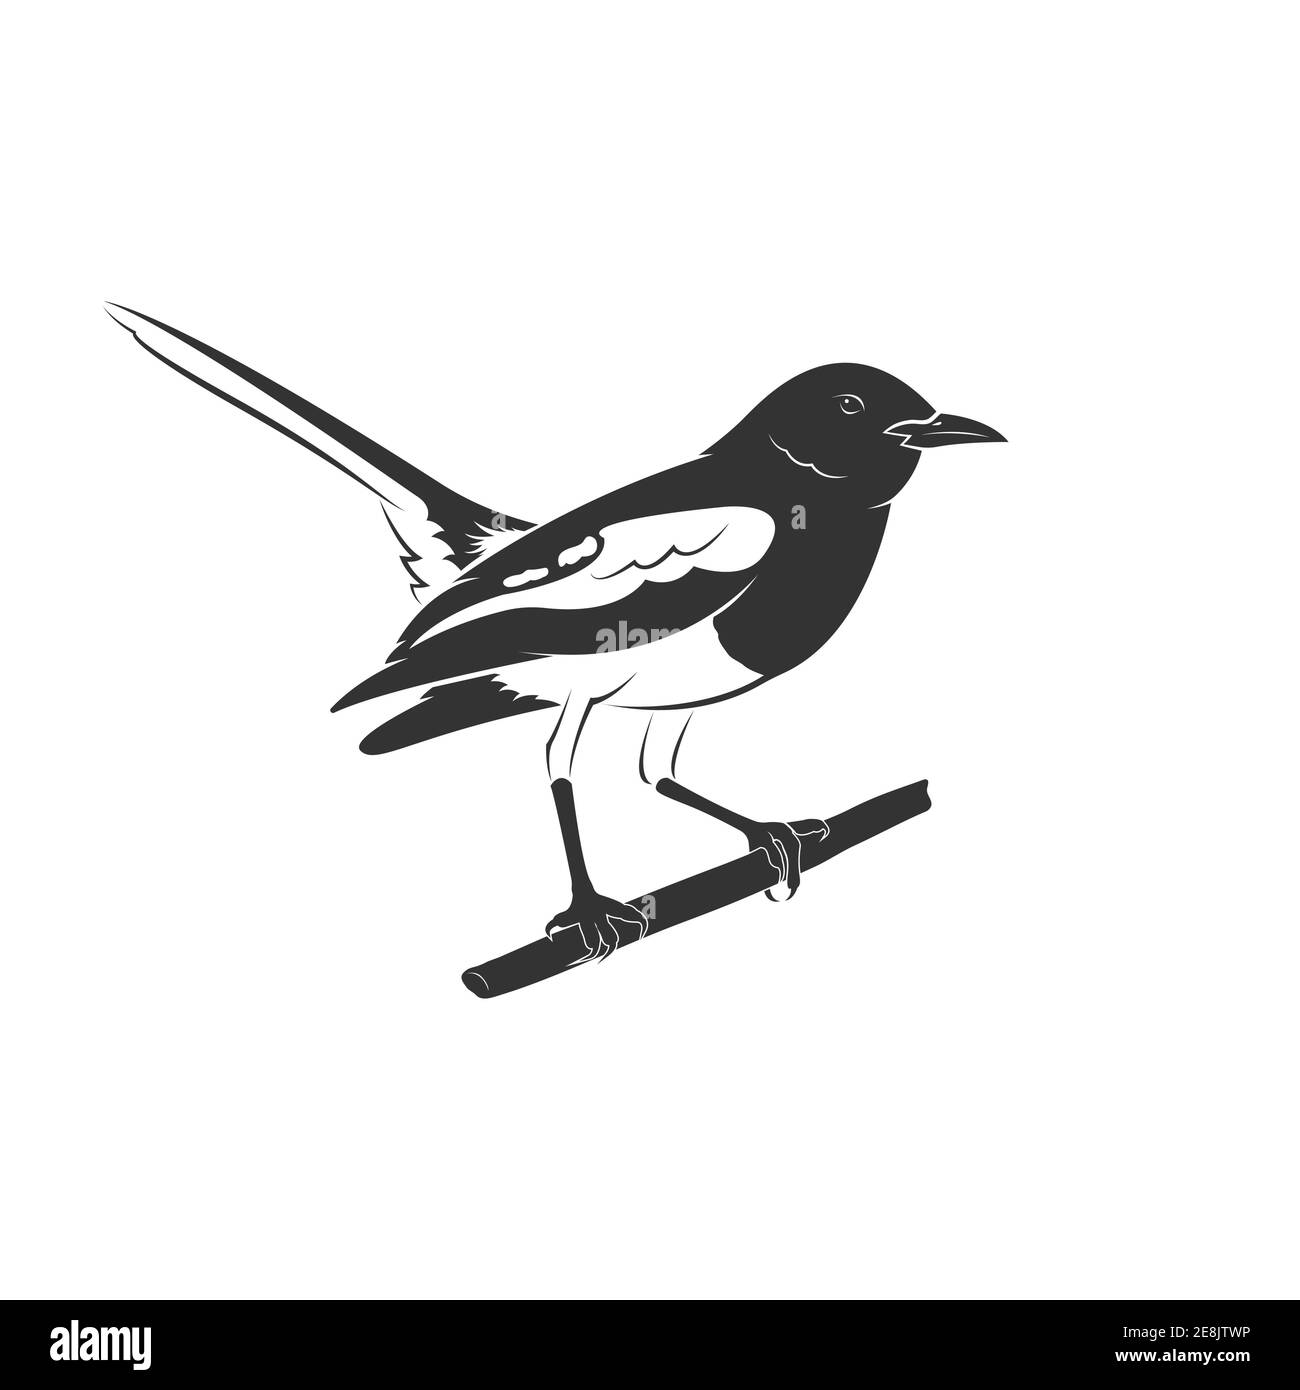 File:Black and white line art drawing of bird body.jpg - Wikimedia Commons